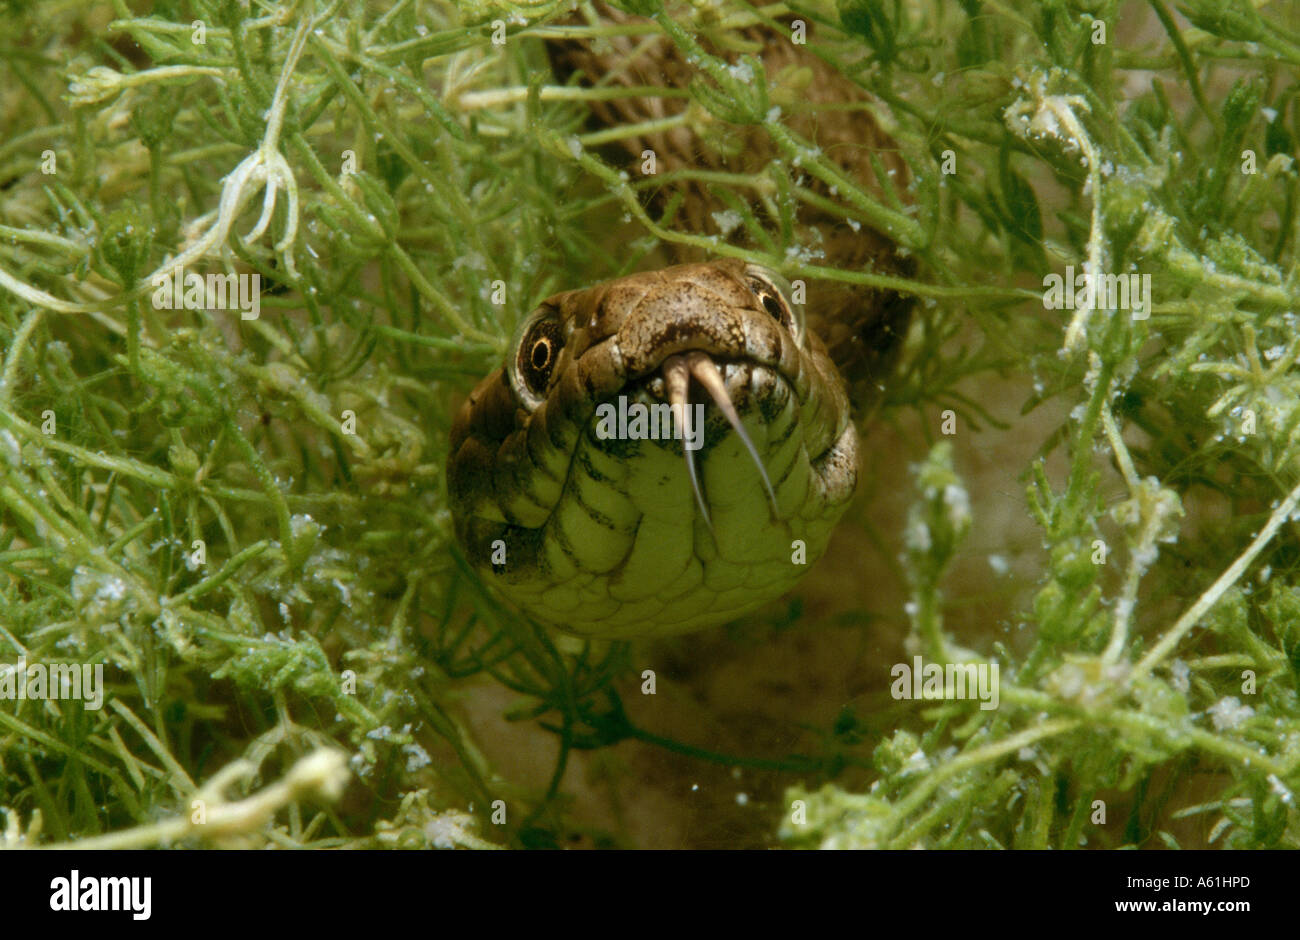 Close-up of Dice snake (Natrix tessellata) swimming underwater Stock Photo